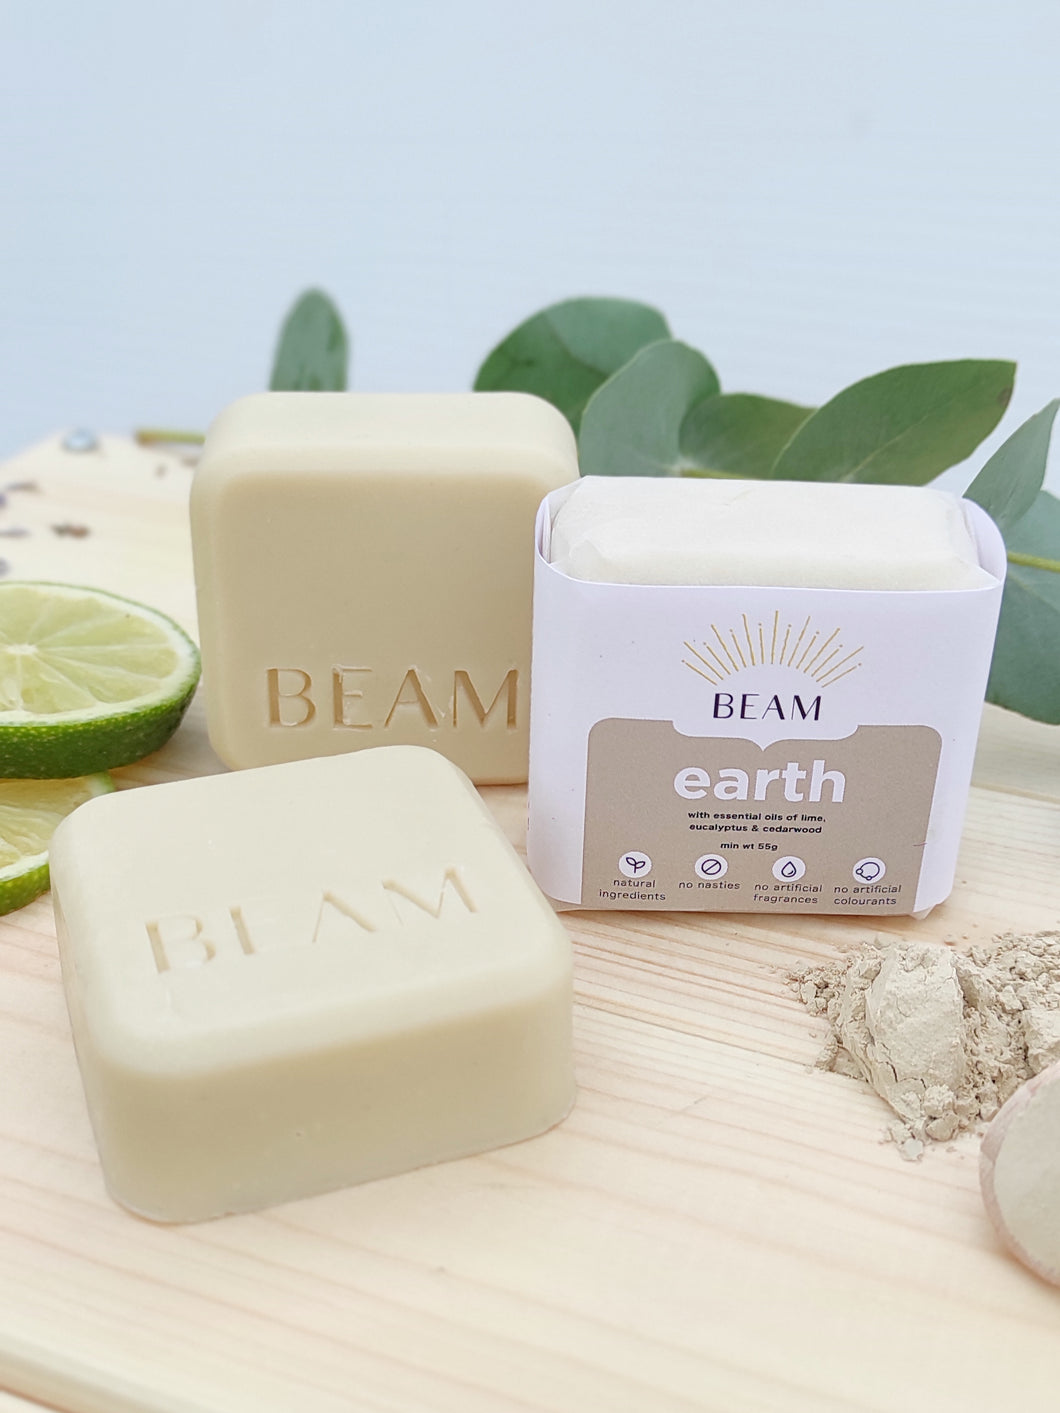 Earth yellow clay soap bar - BEAM natural body care